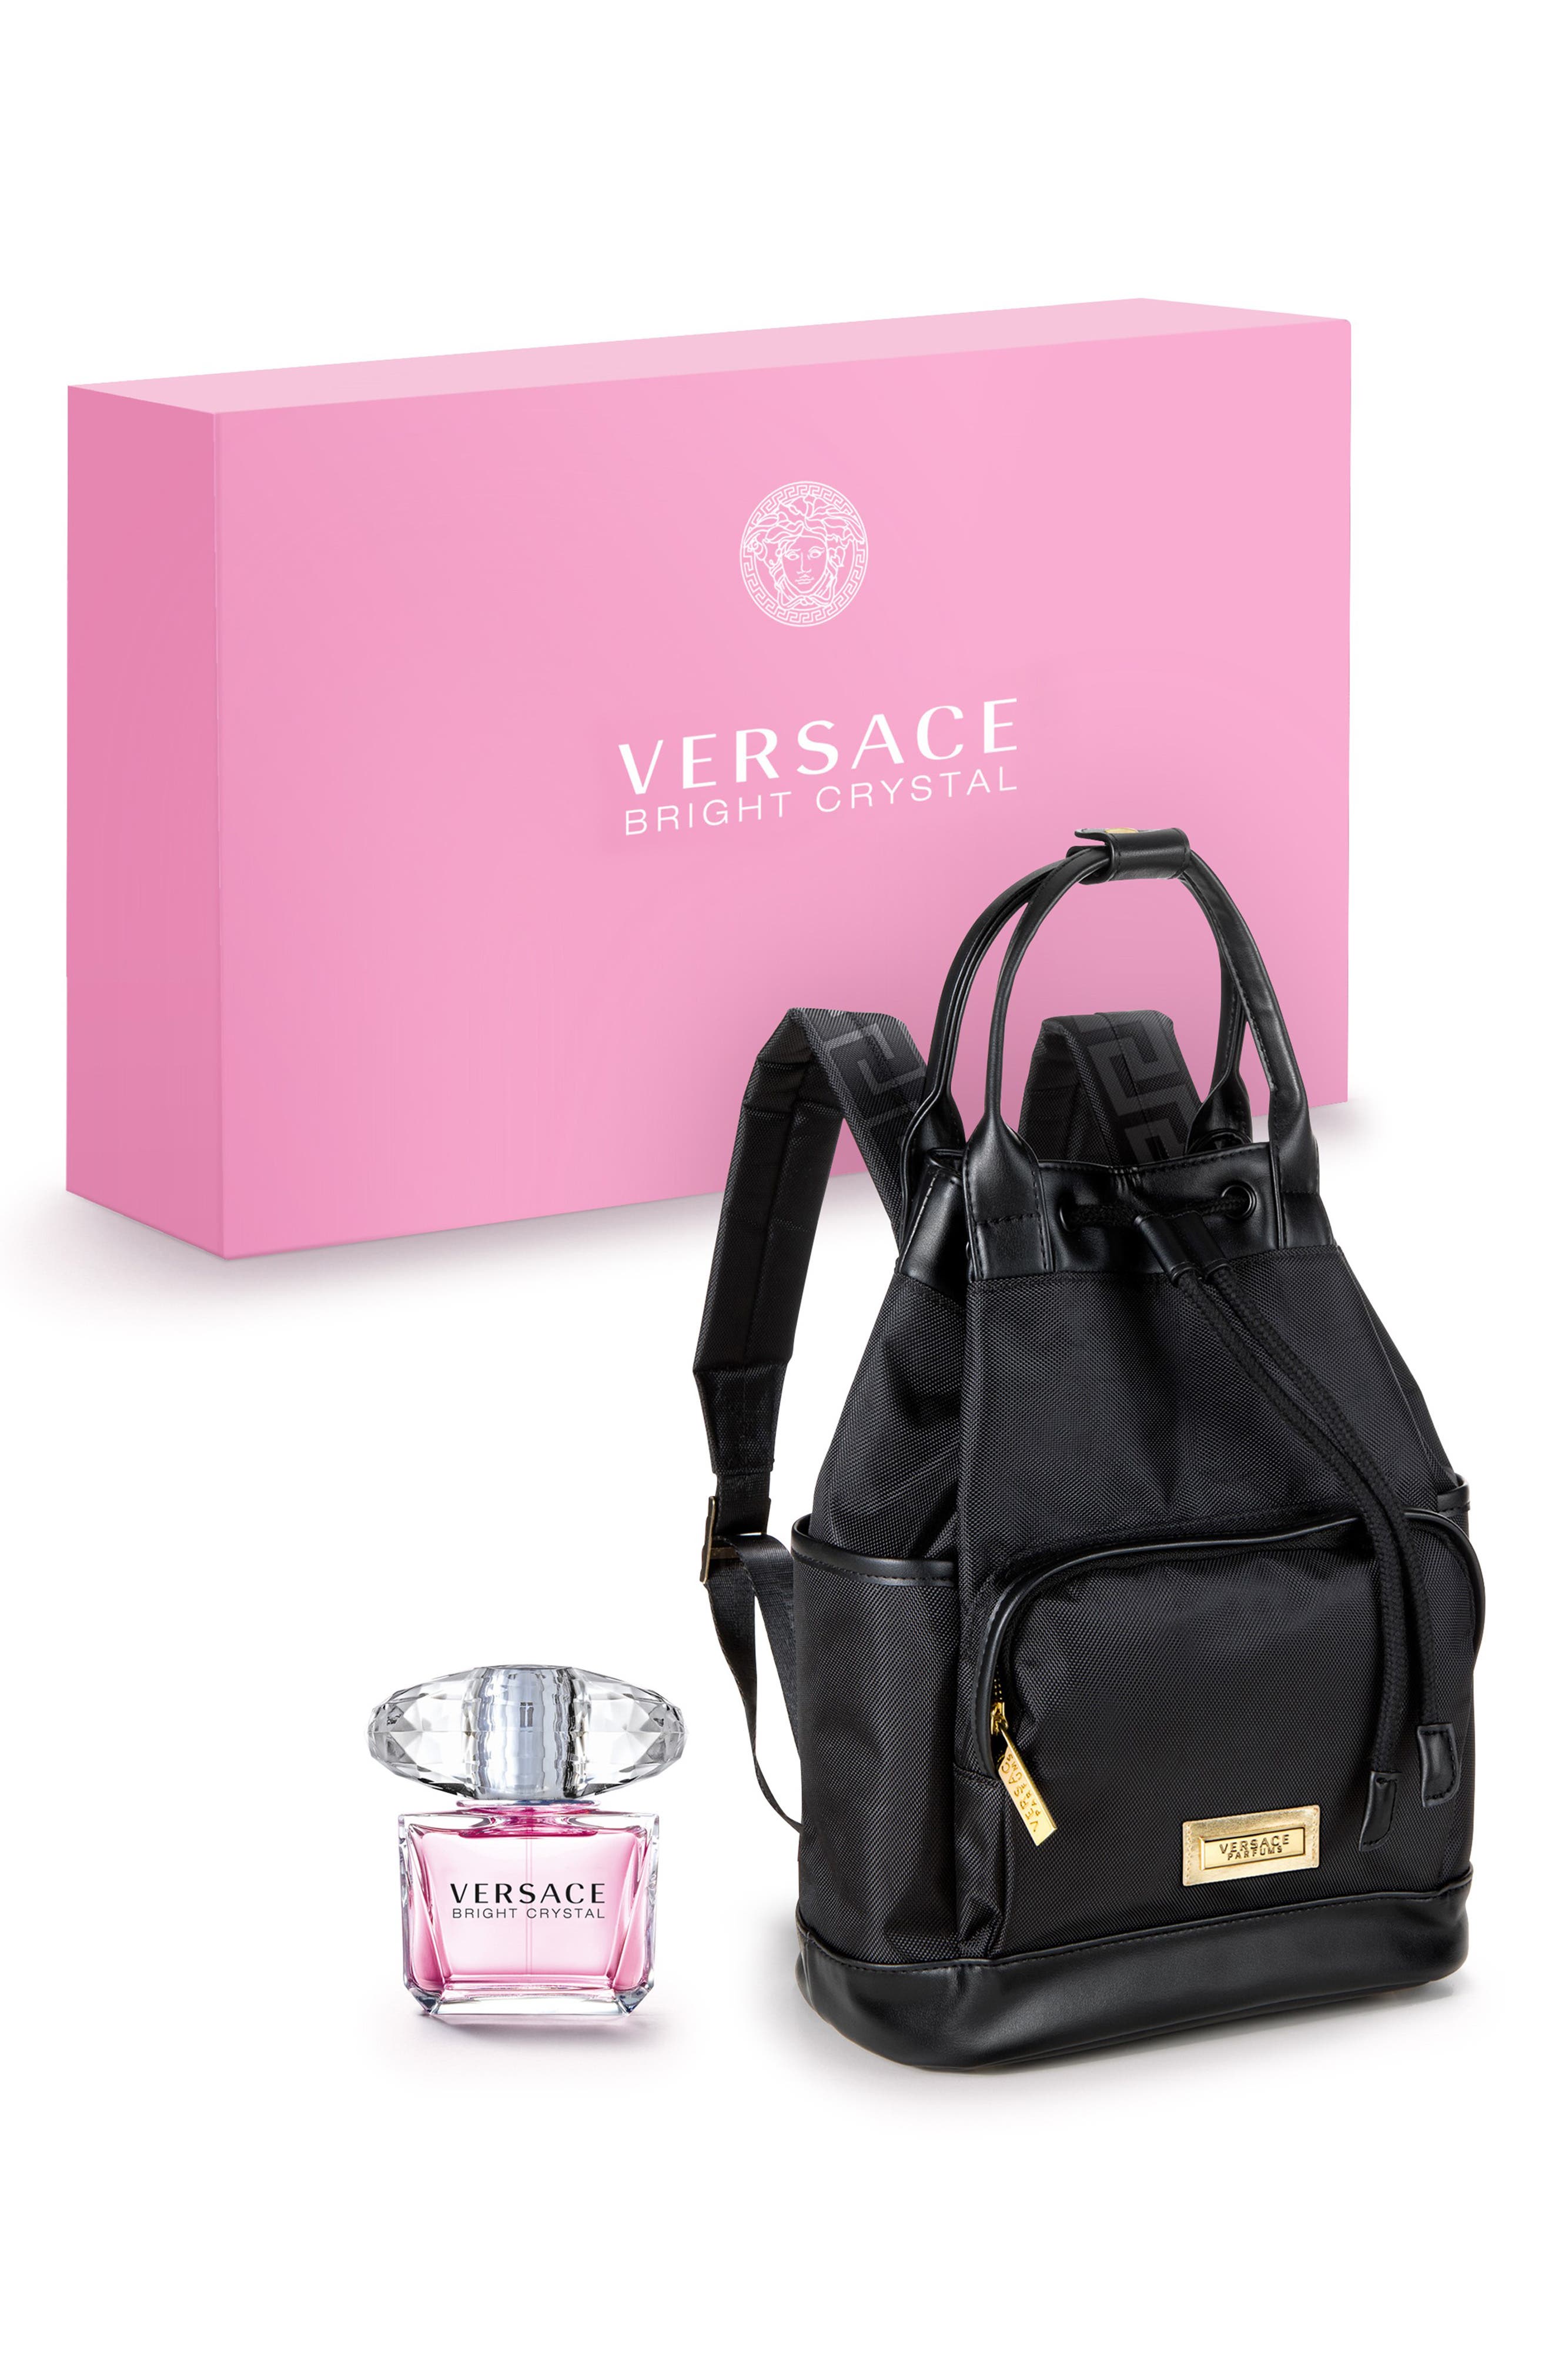 versace cologne gift set backpack